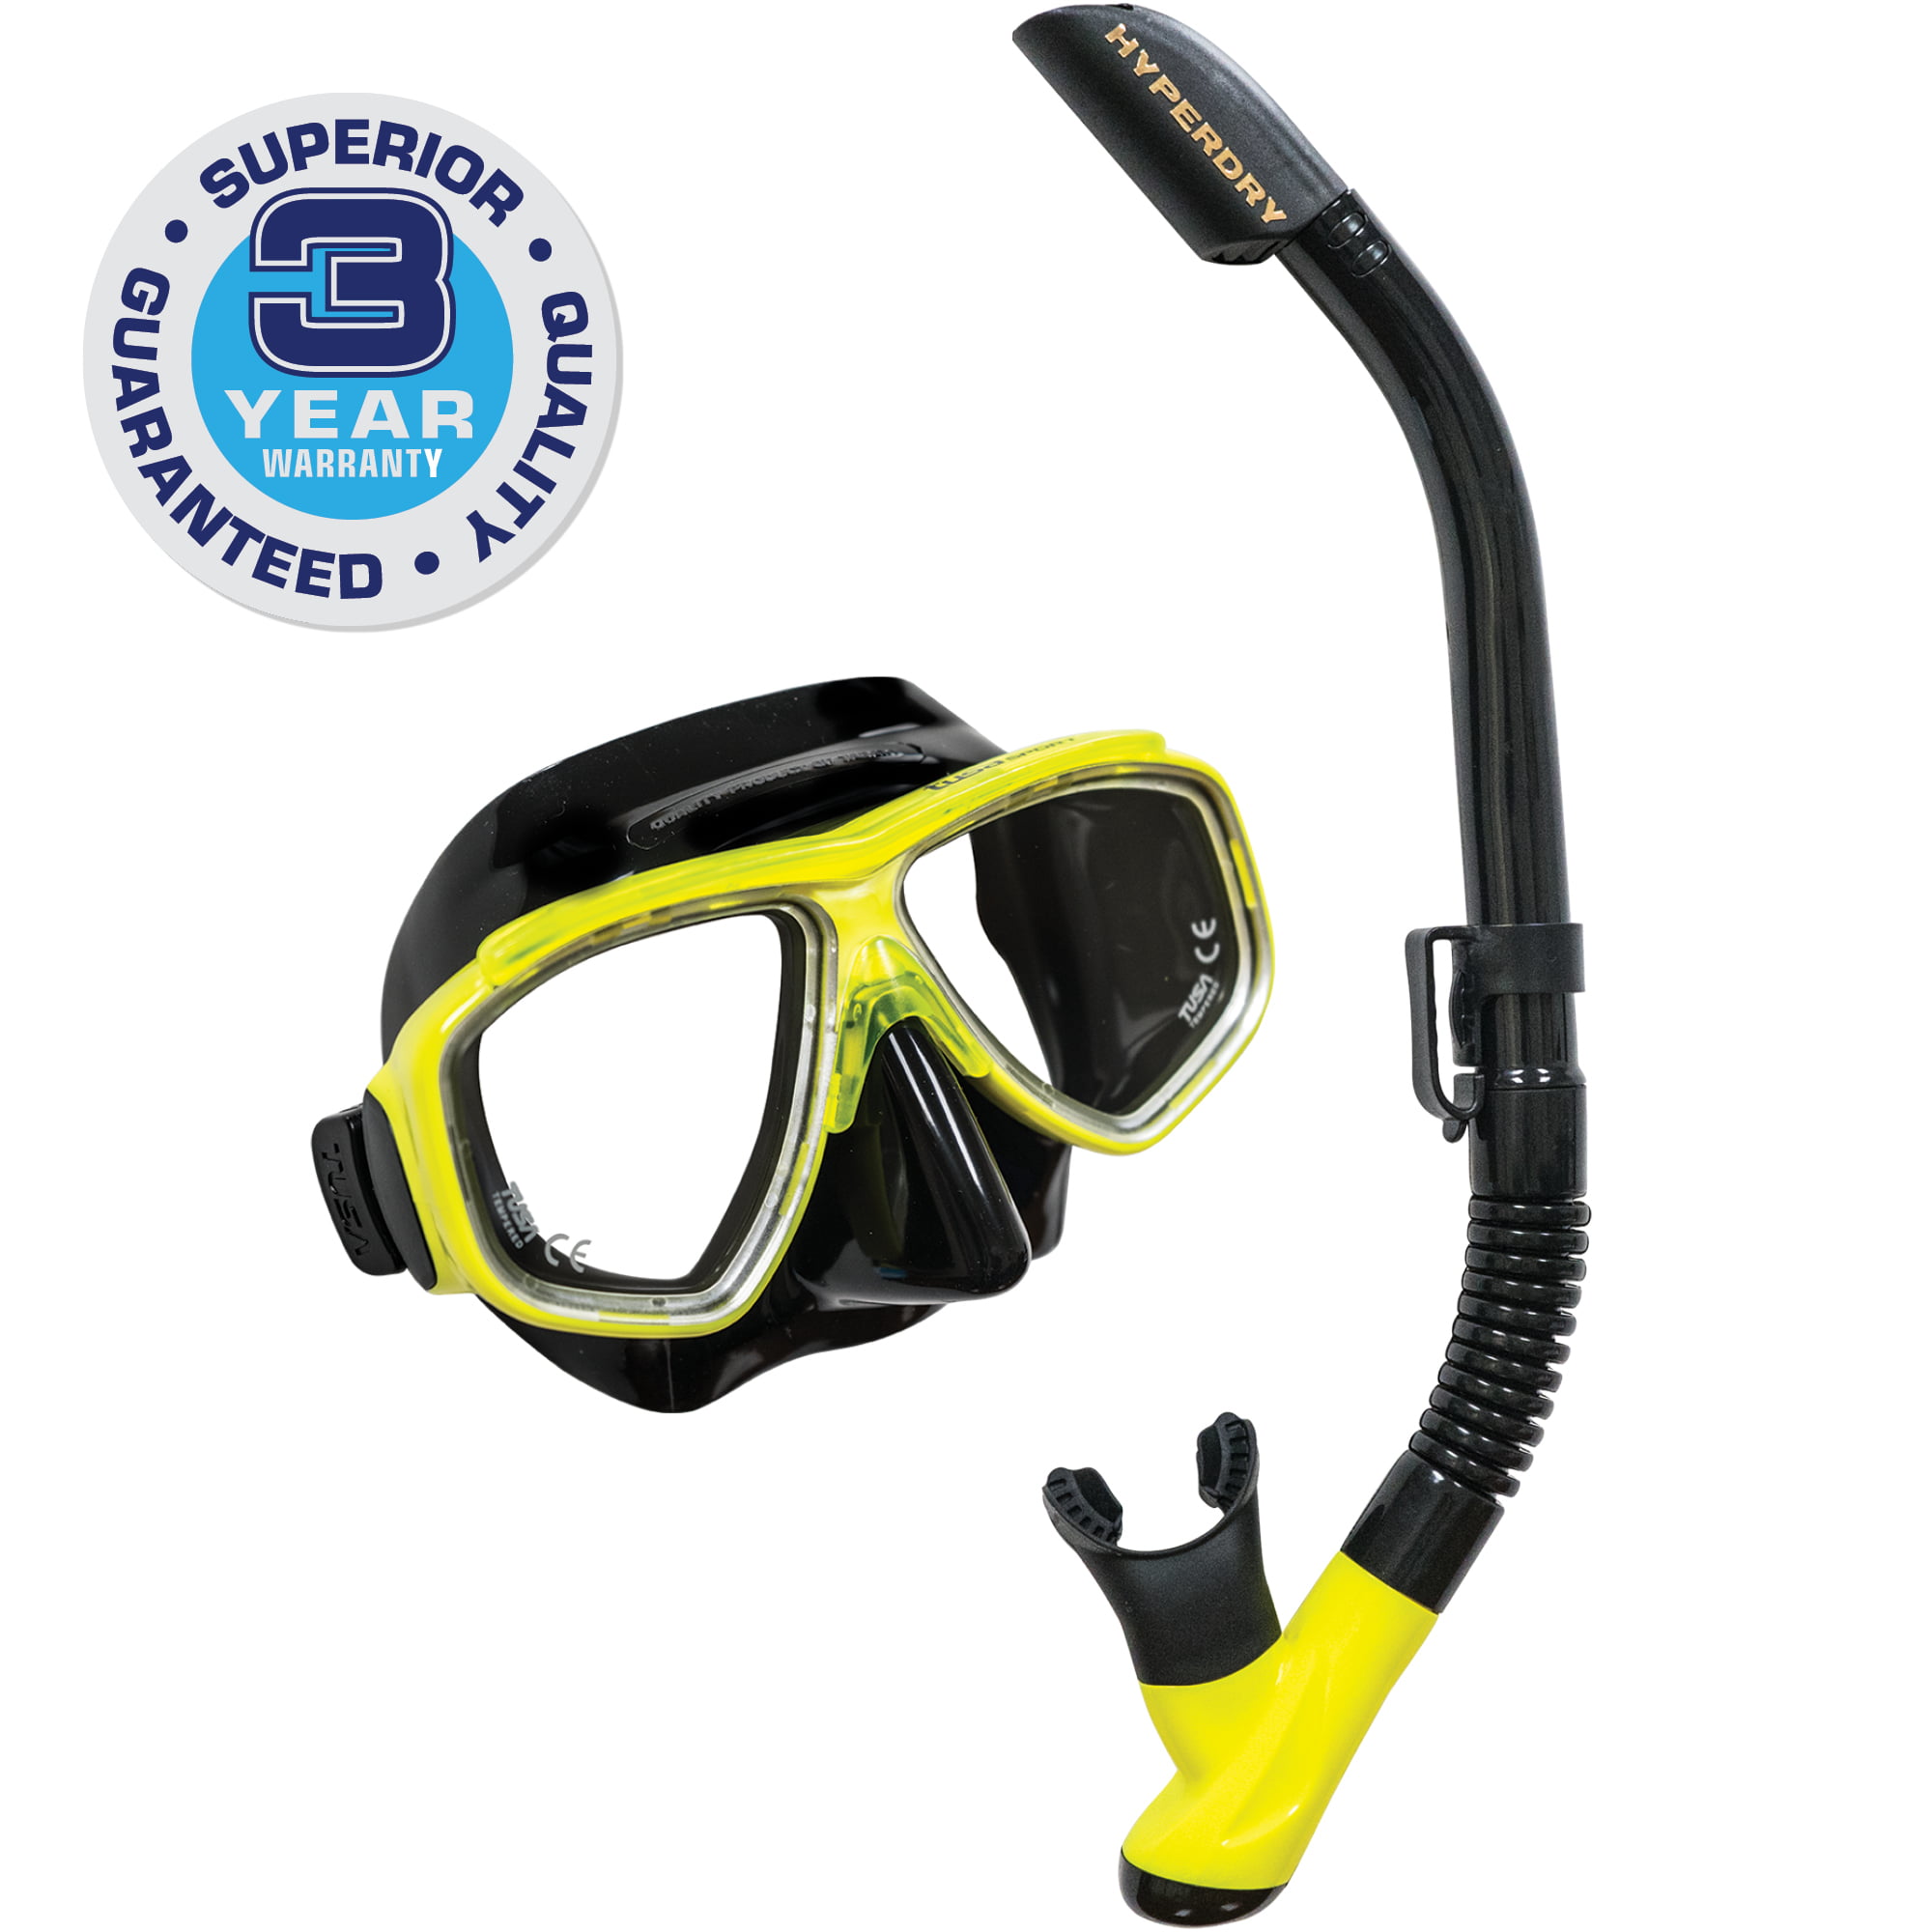 TUSA Sport Adult Splendive Mask and Snorkel Combo 